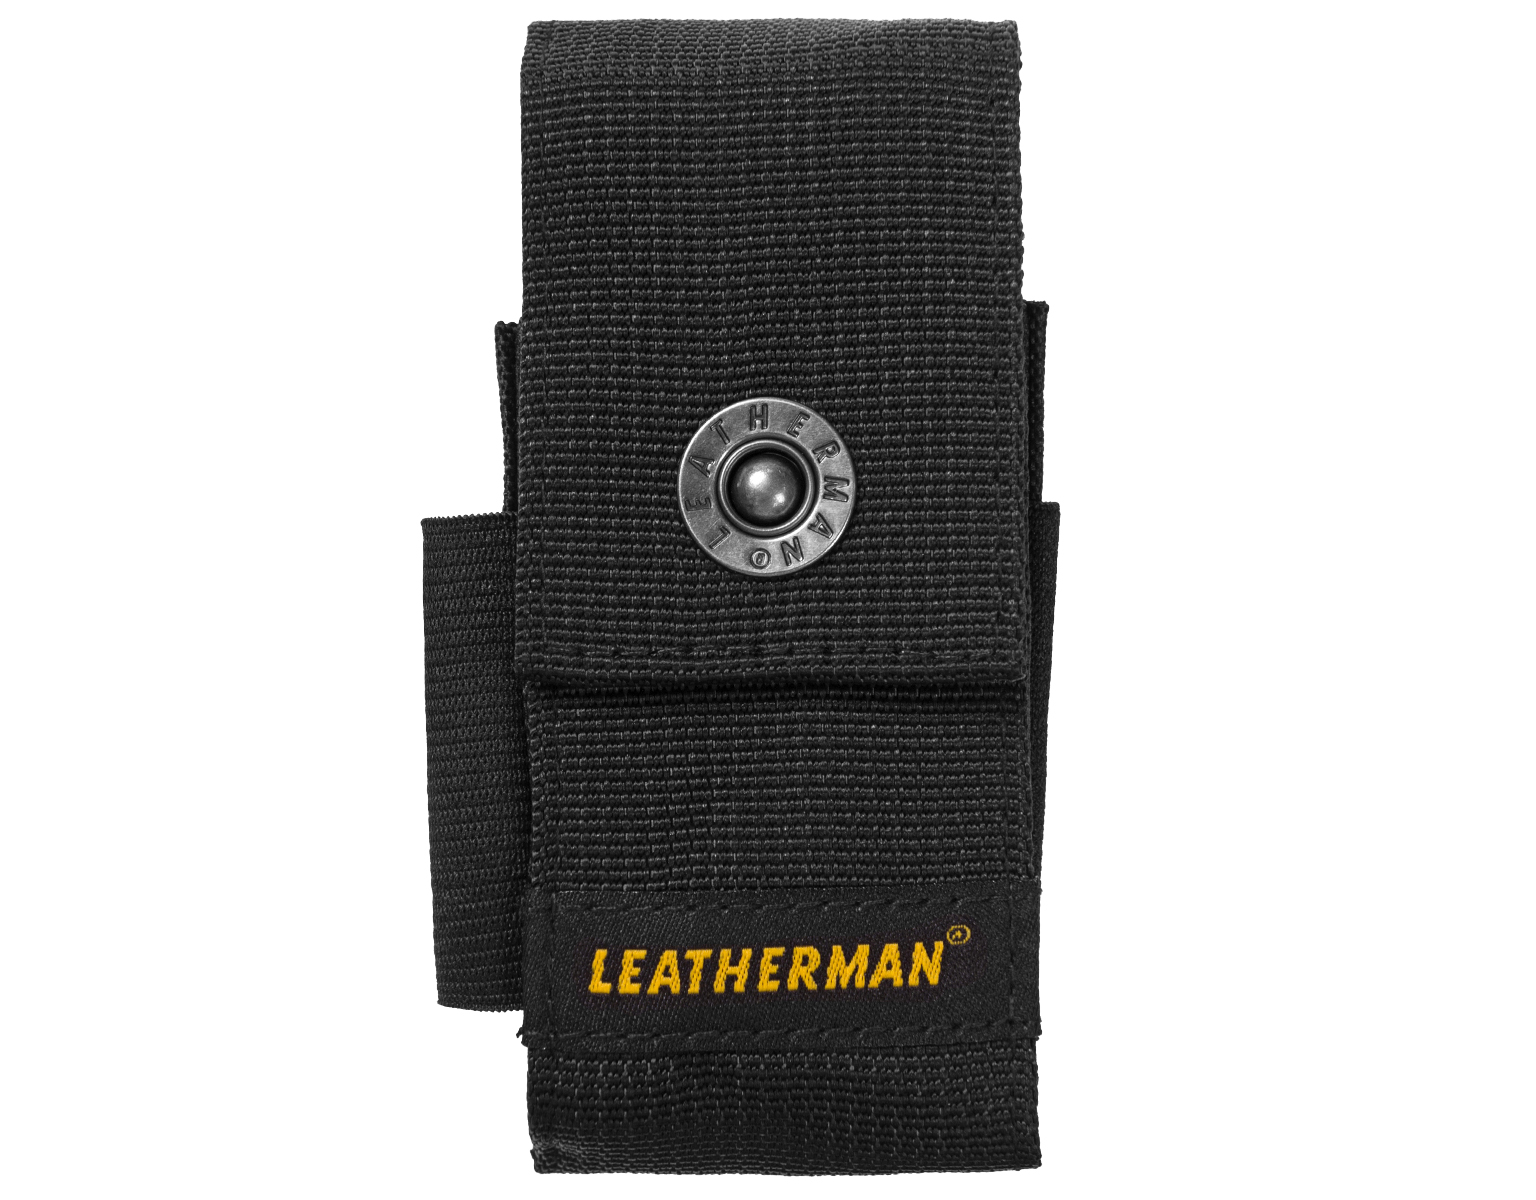 Etui Leatherman Medium nylonowe z kieszonkami 934932